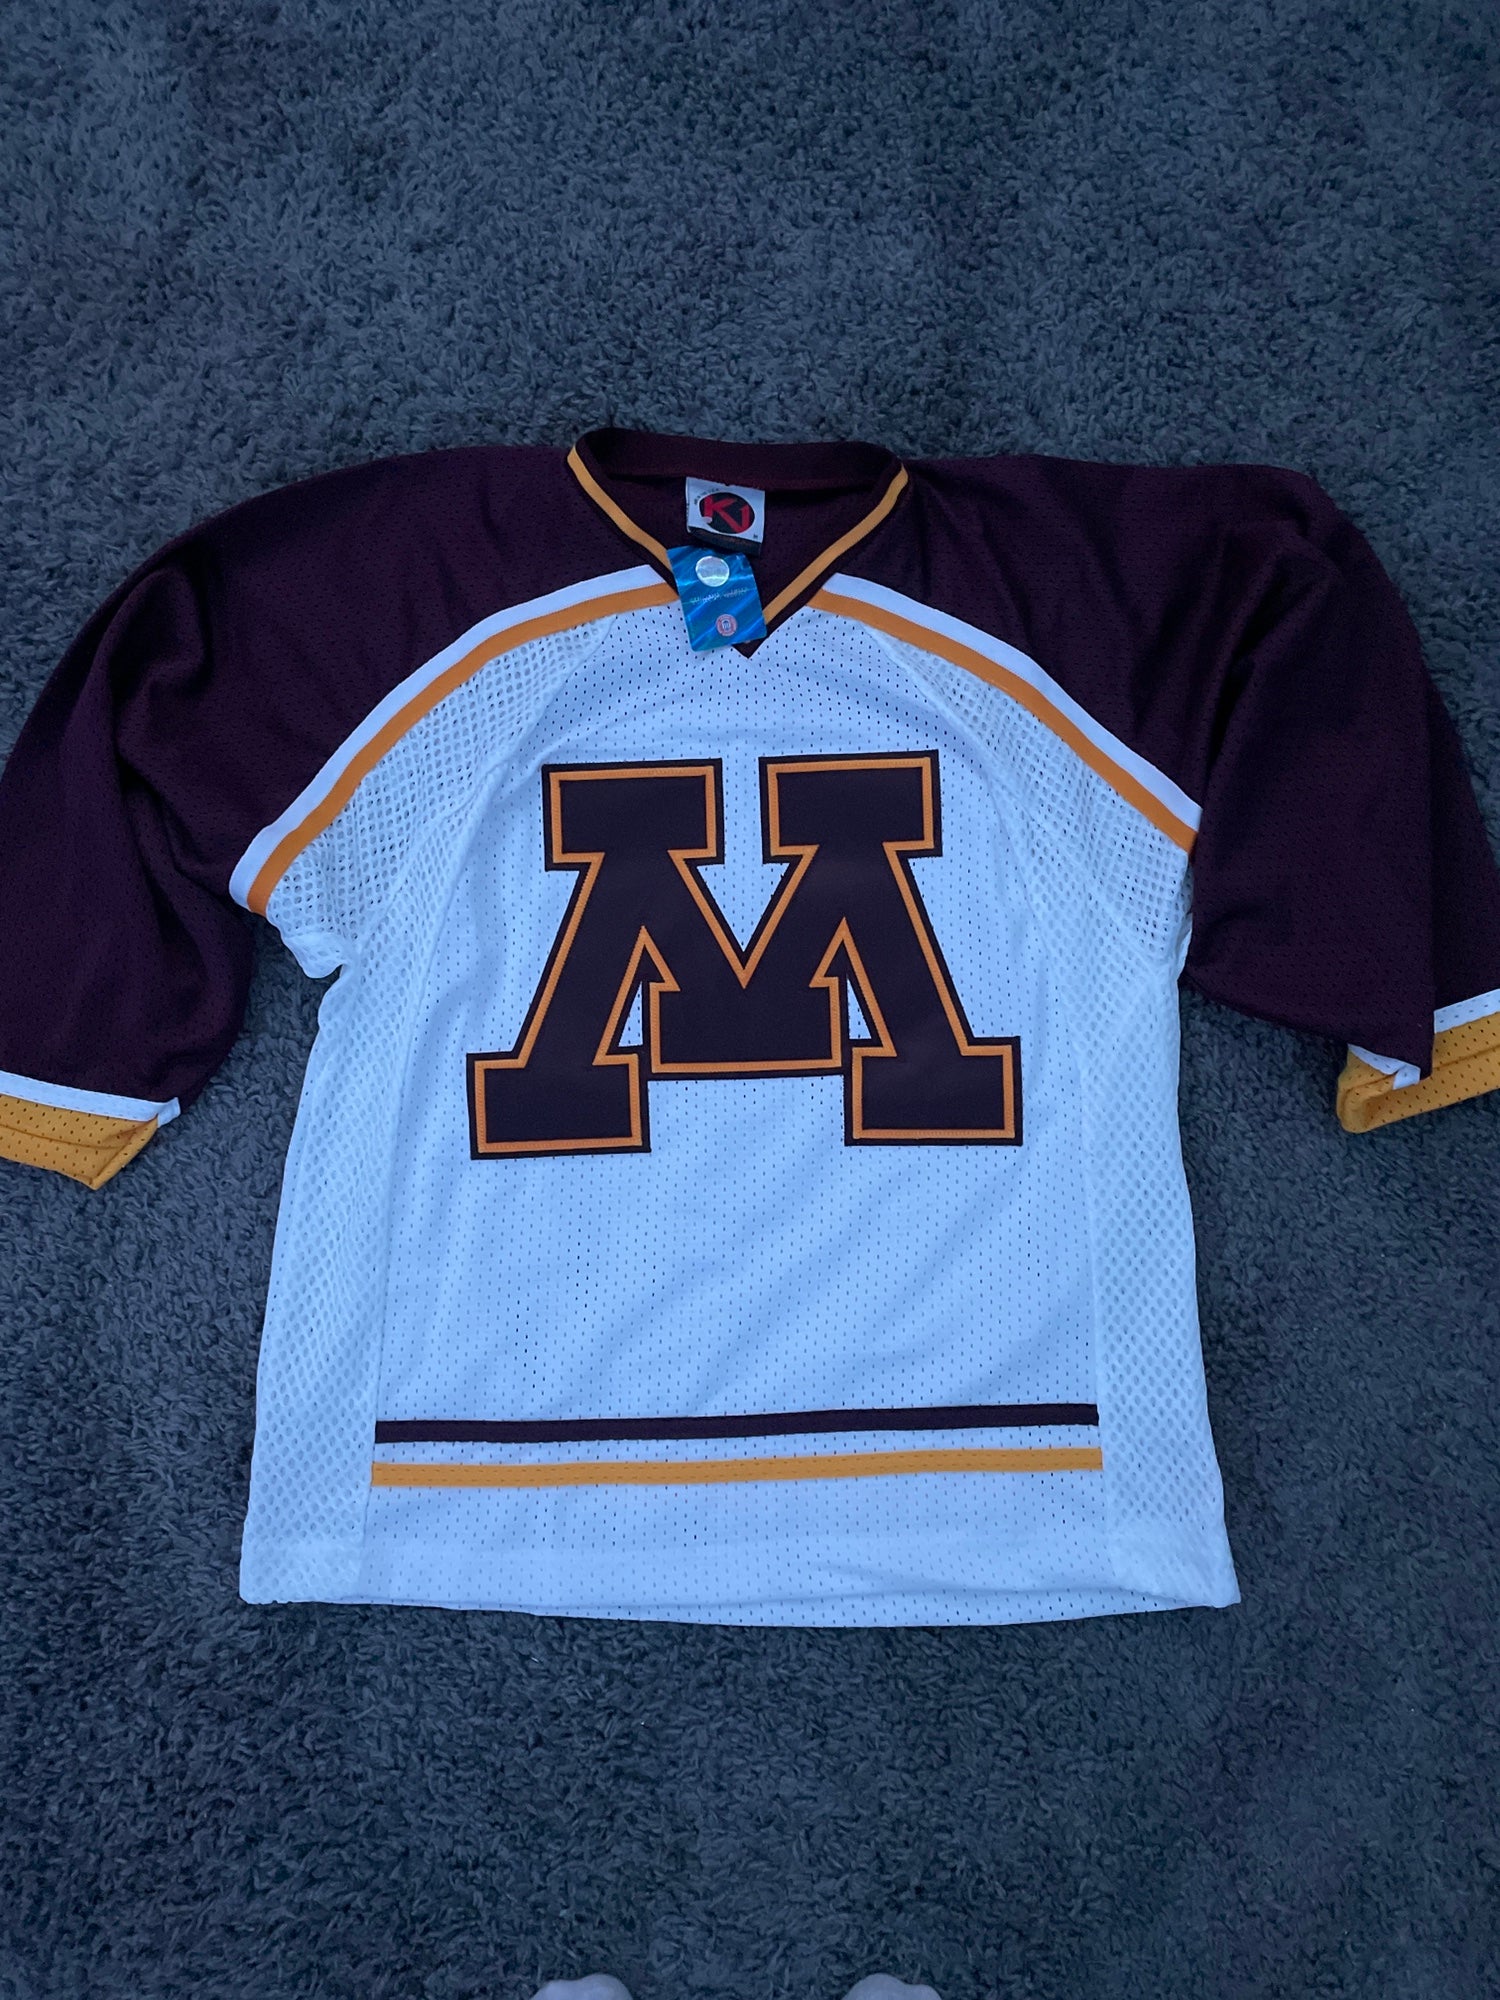 Youth University of Minnesota Golden Gophers Hockey Jersey